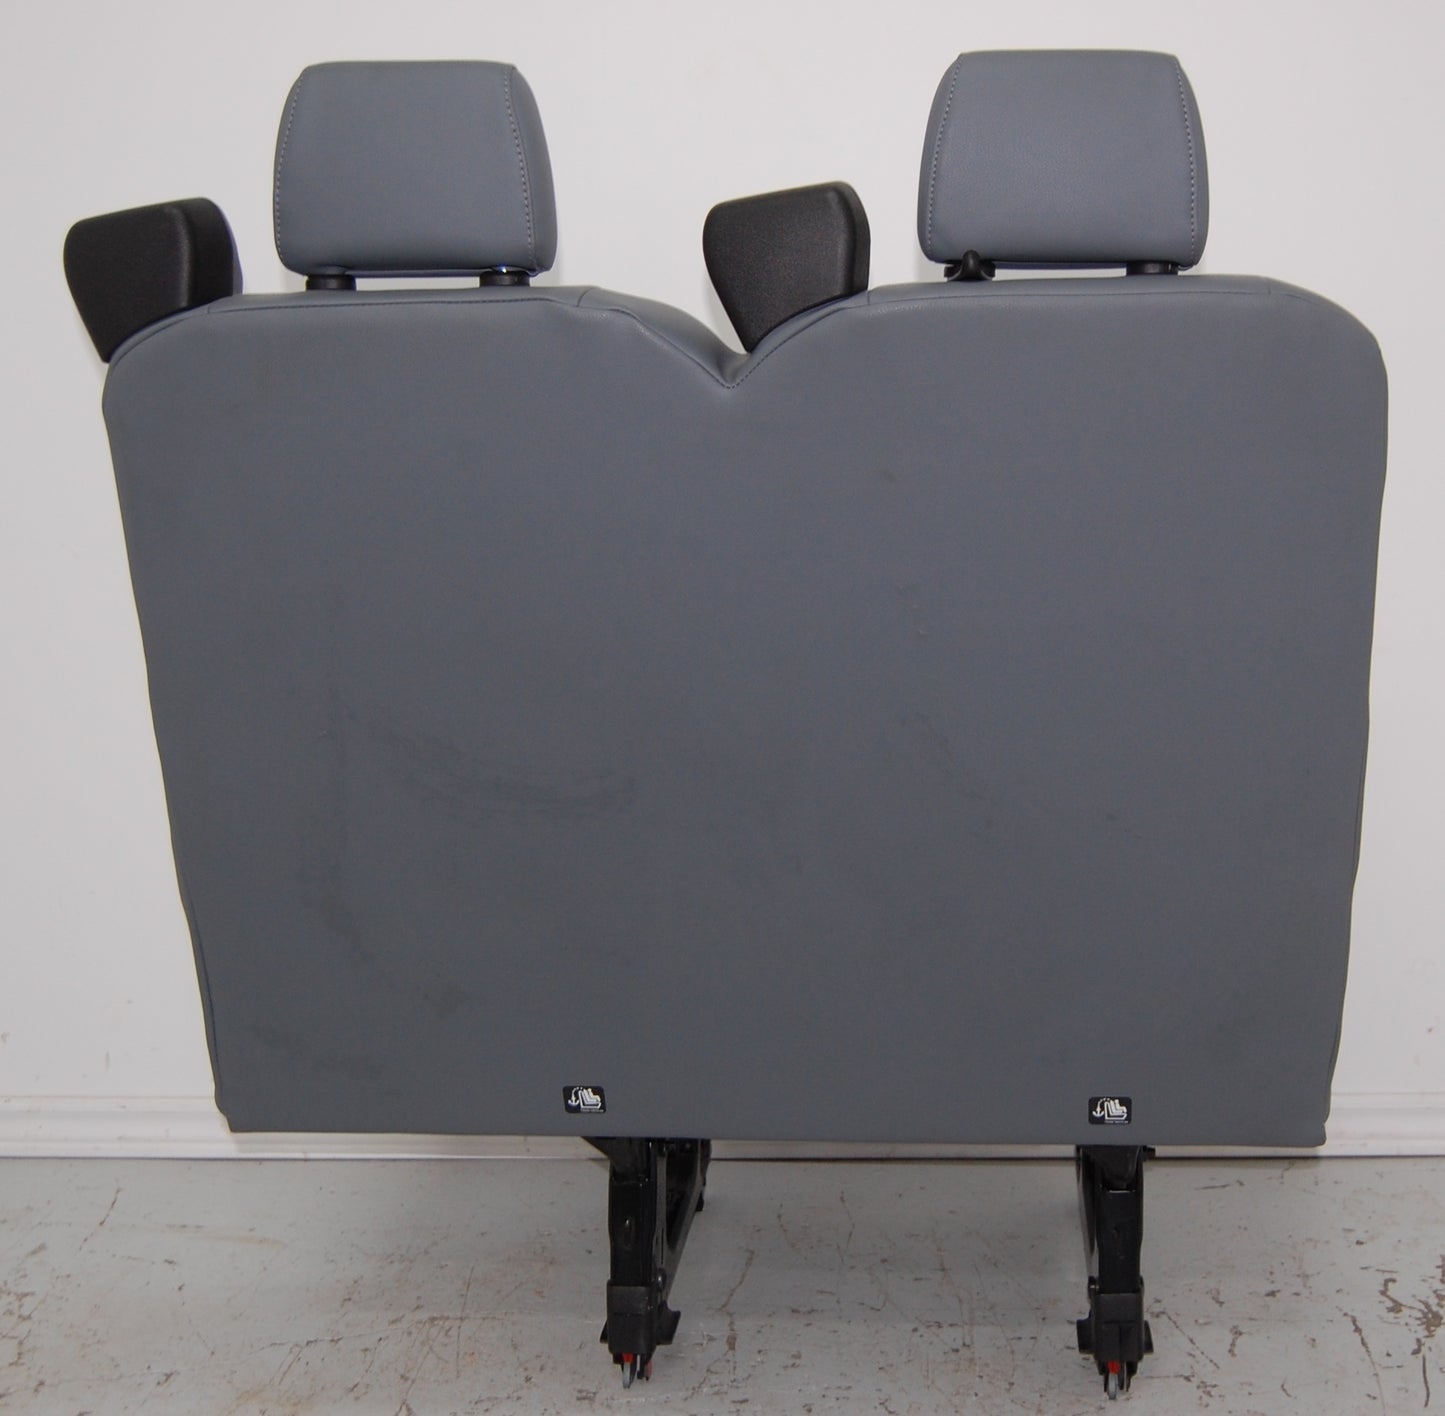 Ford Transit Passenger Van 2018 Grey Vinyl 2 Seater 36 inch Left Double Bench Jump Seat